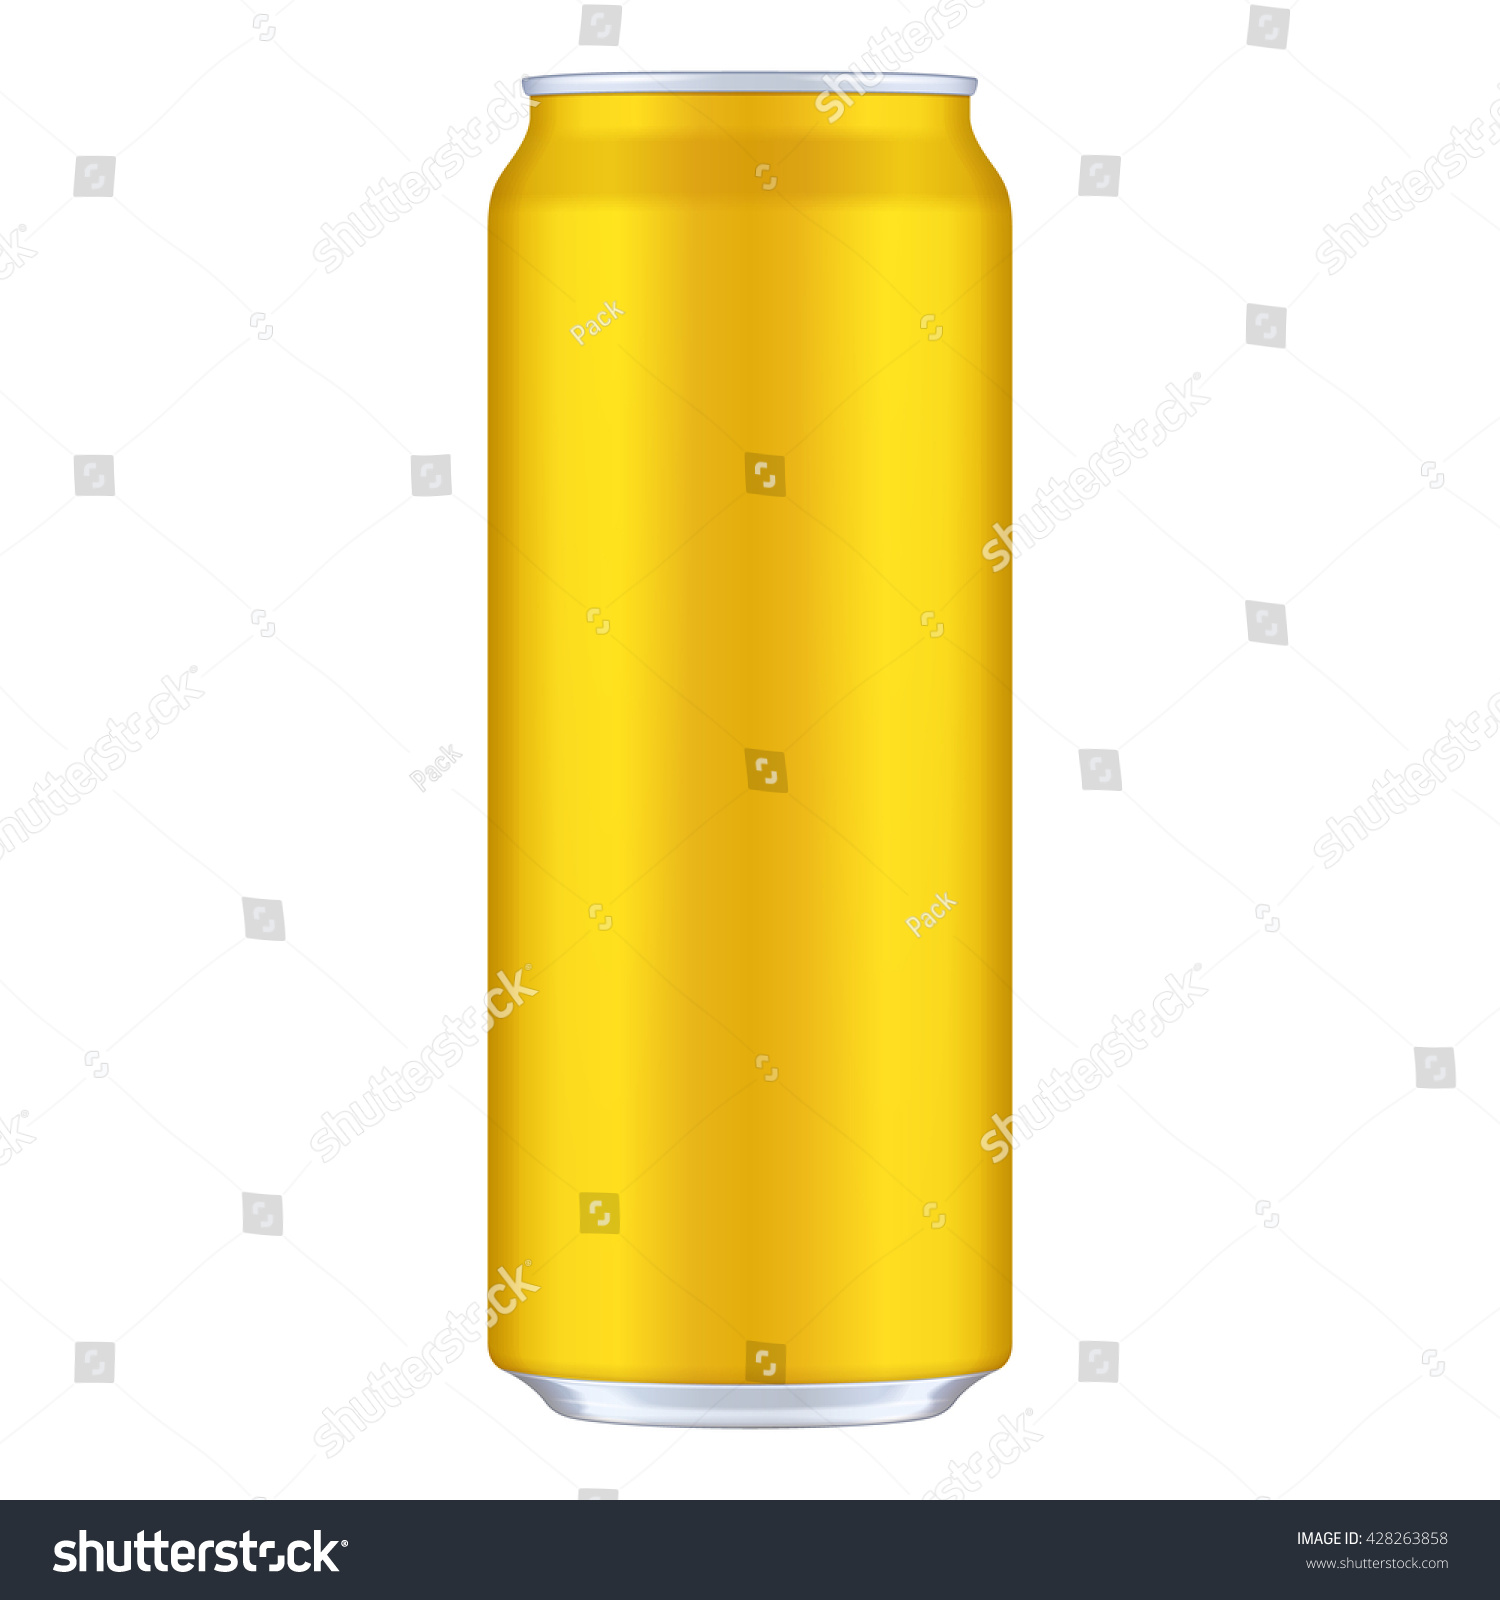 Download Yellow Orange Golden Metal Aluminum Beverage Stock Vector Royalty Free 428263858 PSD Mockup Templates